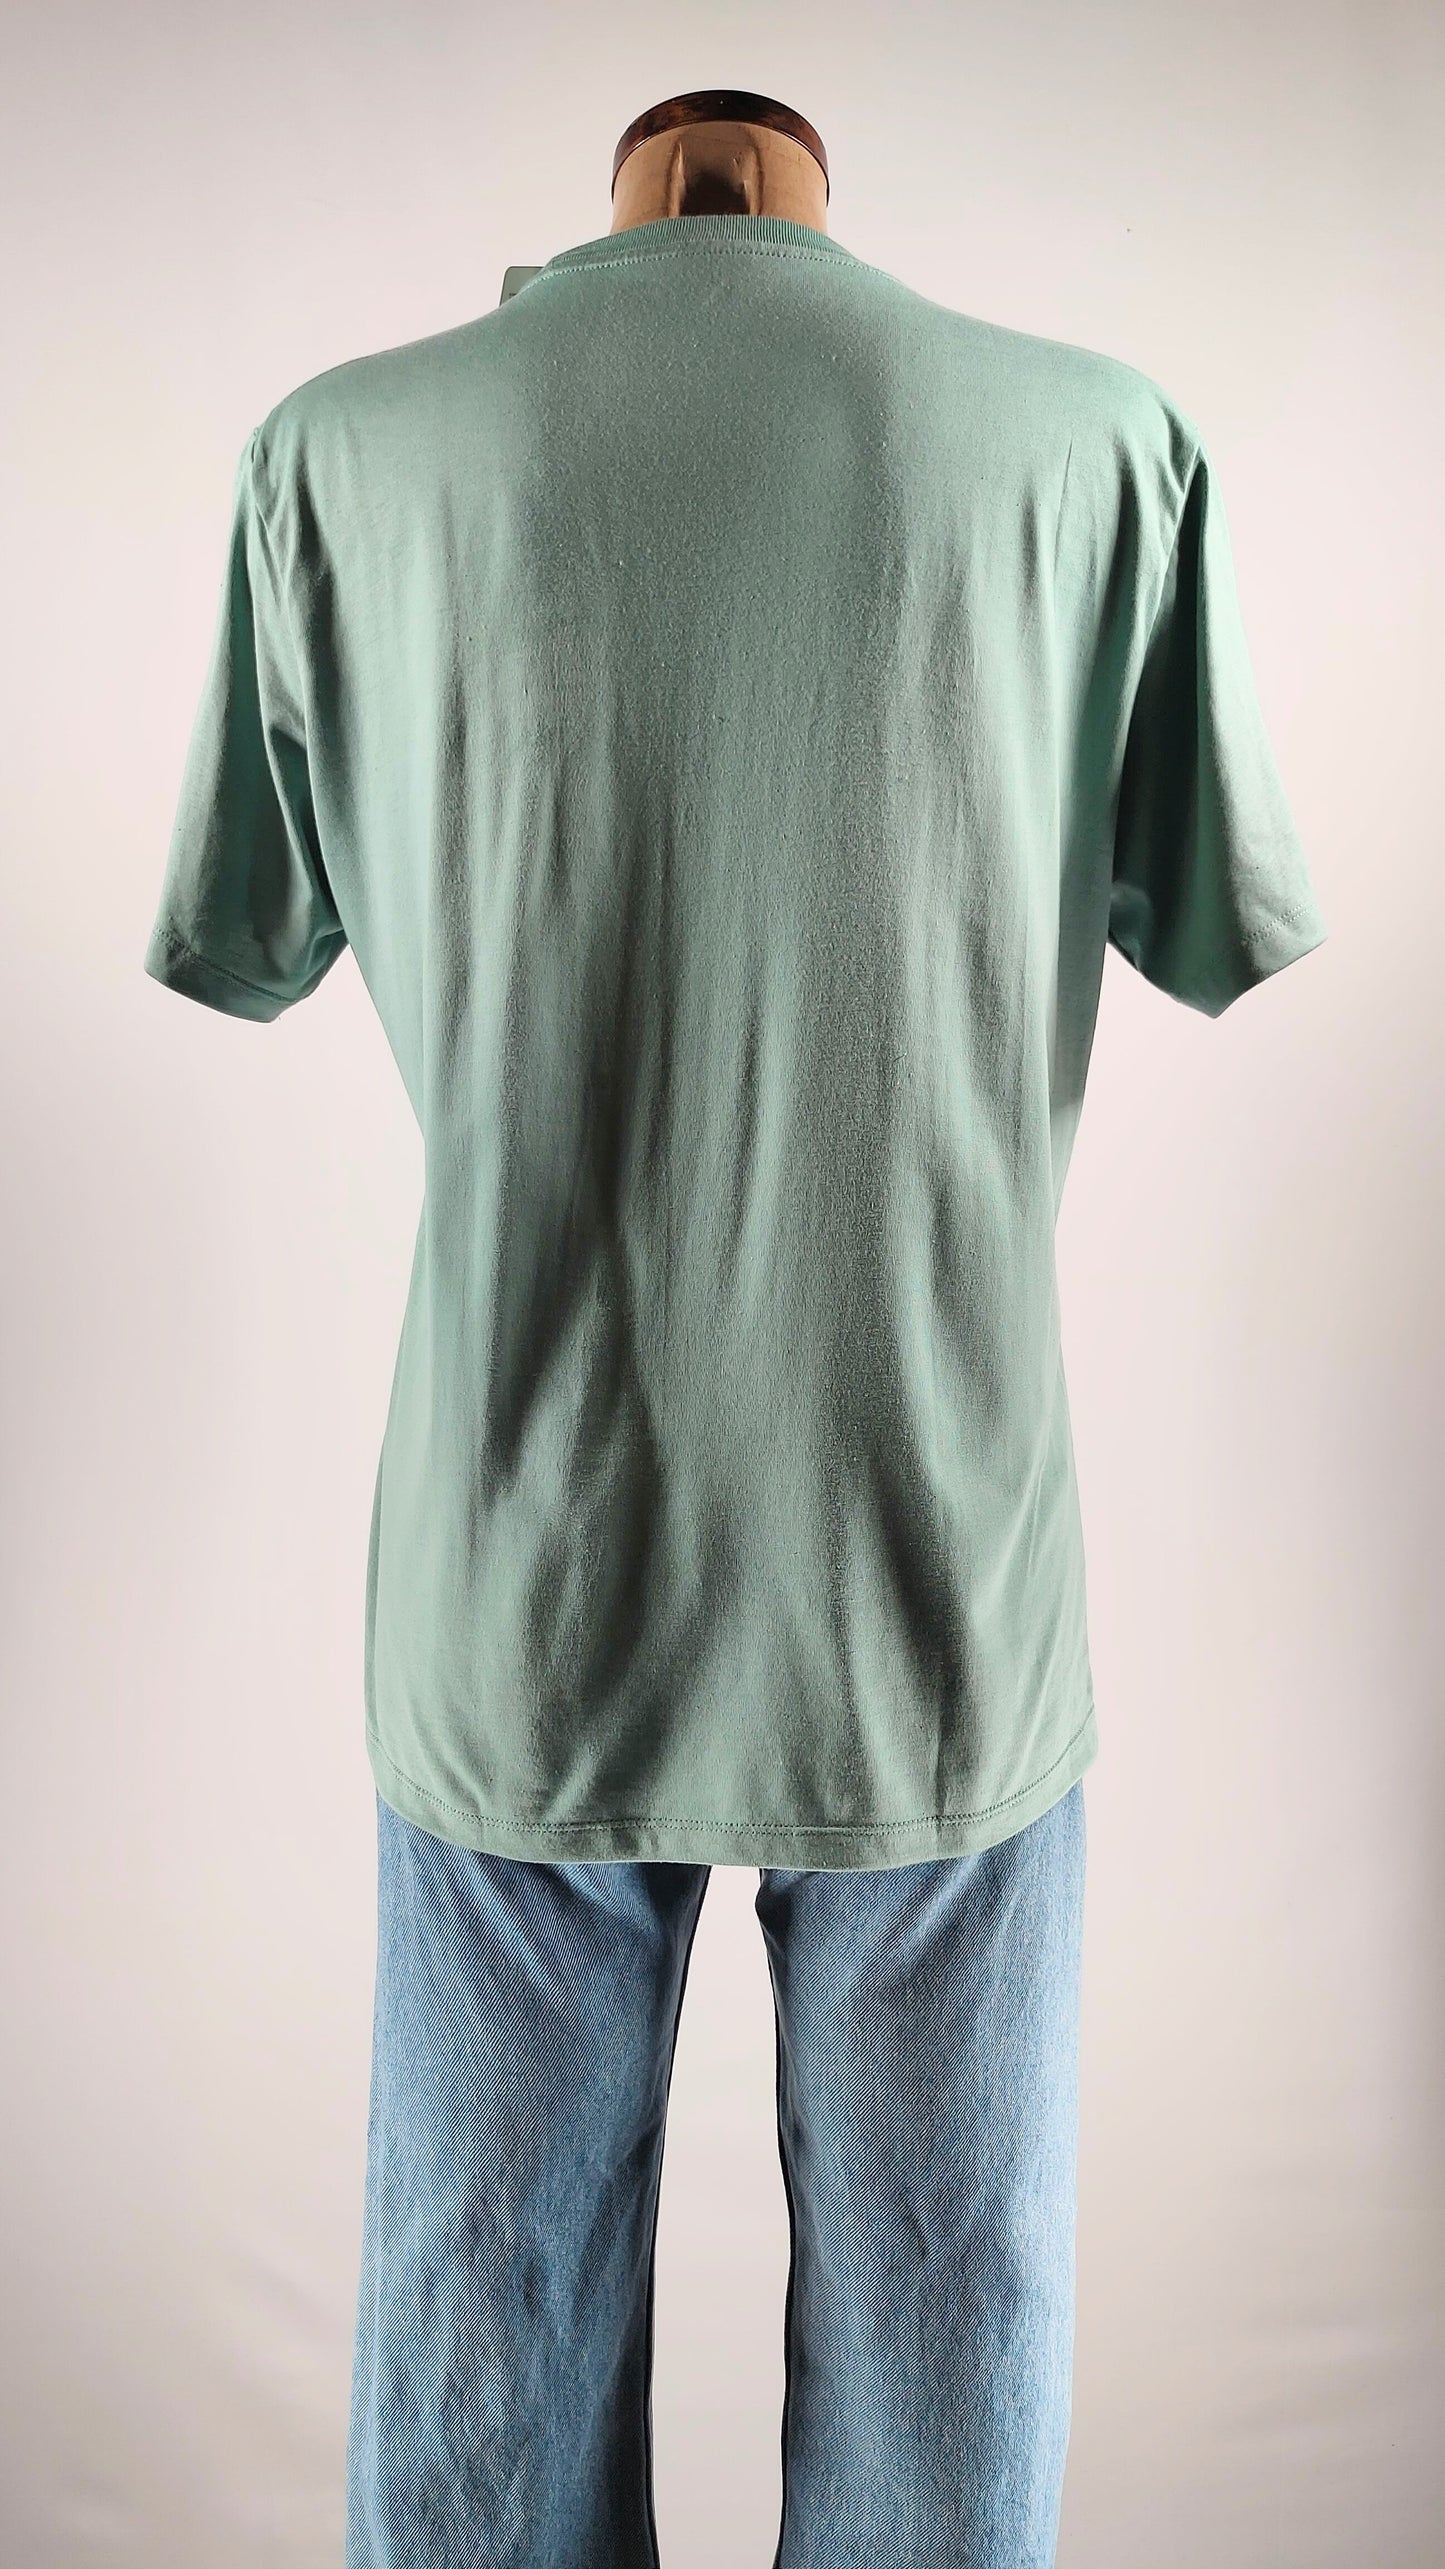 Camiseta verde con cuello redondo